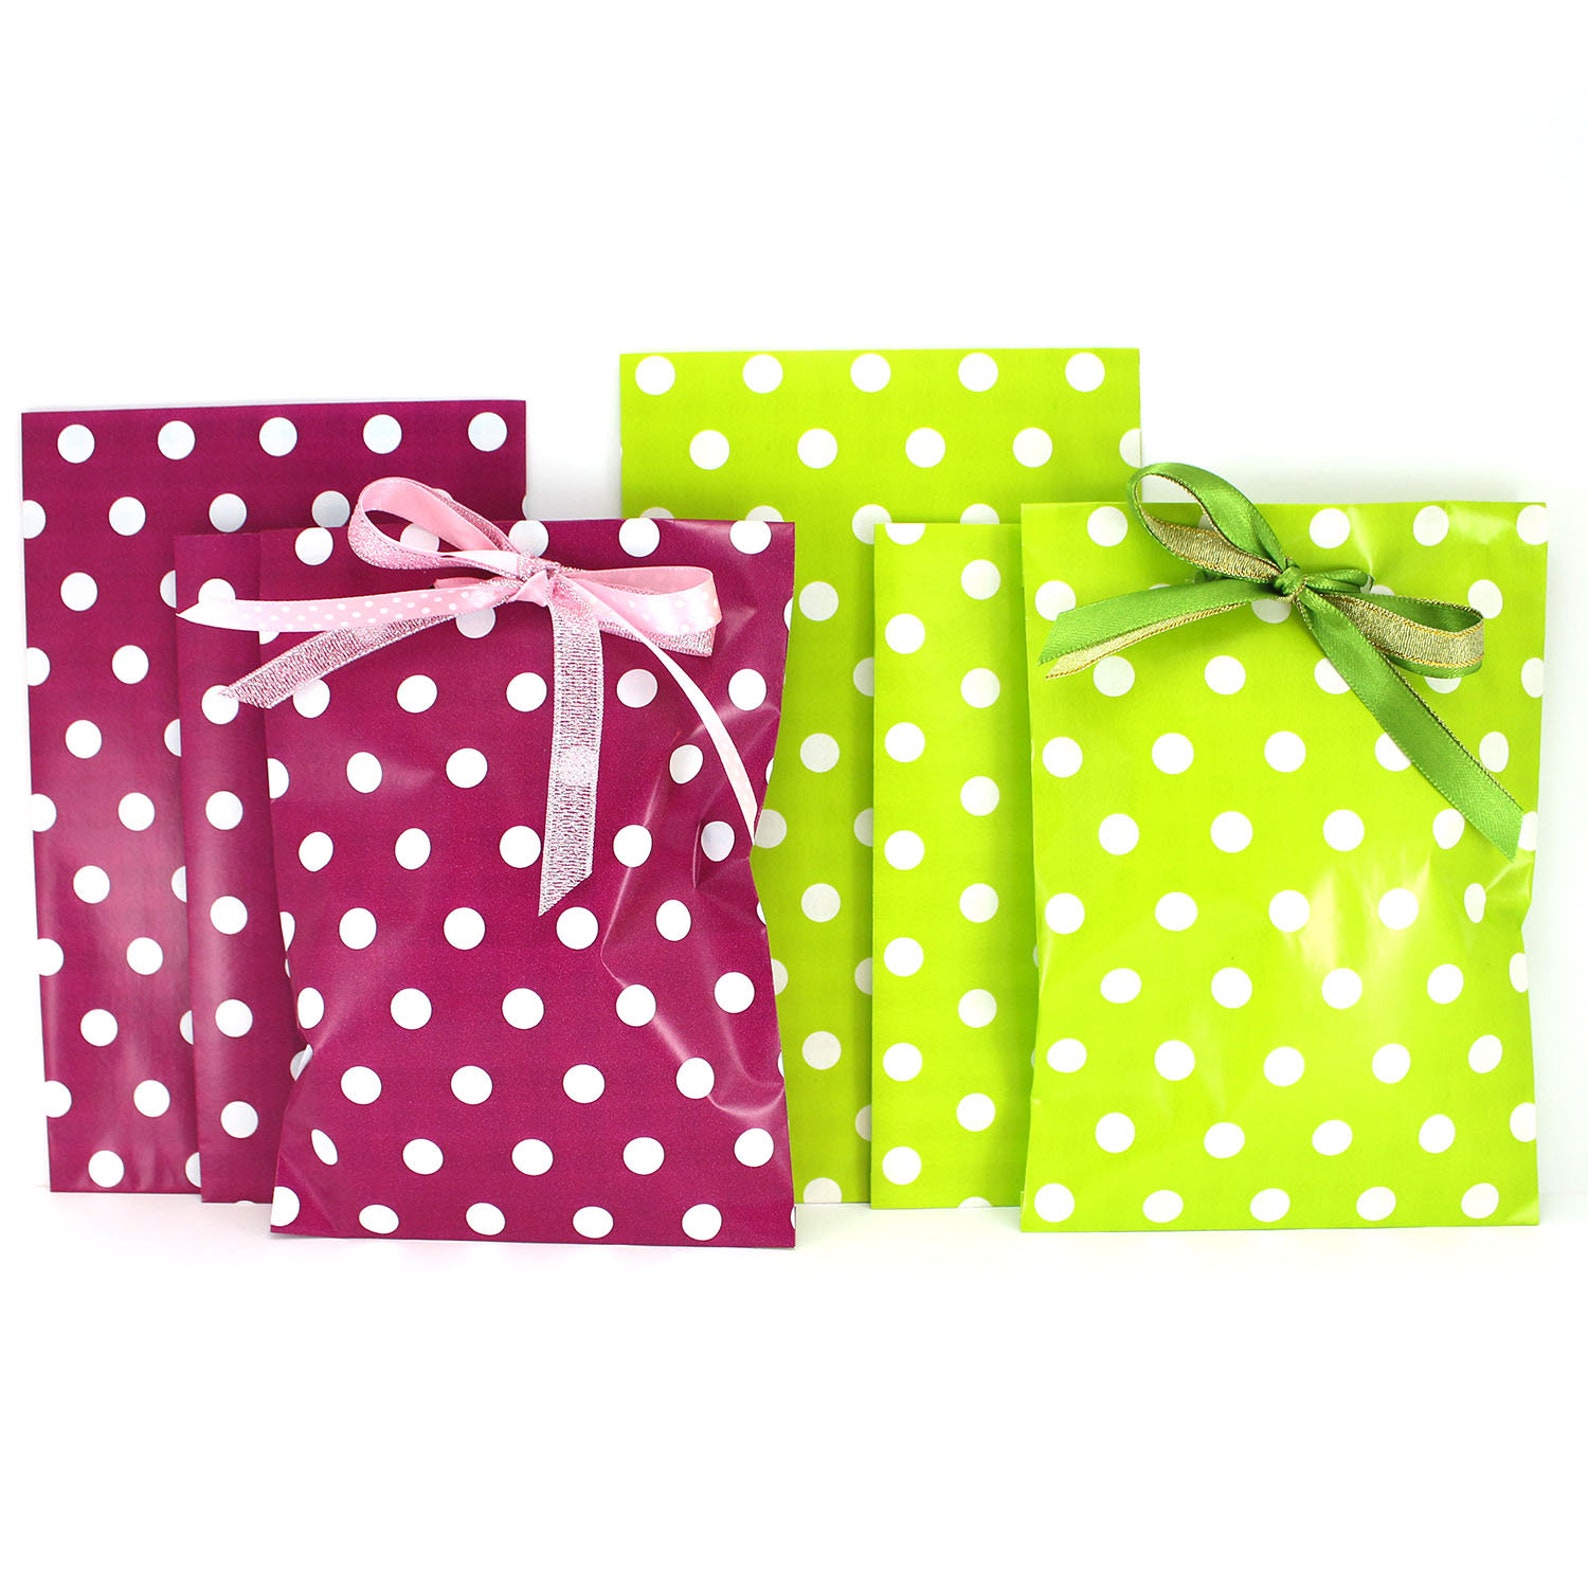 Handmade Party Gift Bags Polka Dots treat bags Wedding favor | Etsy